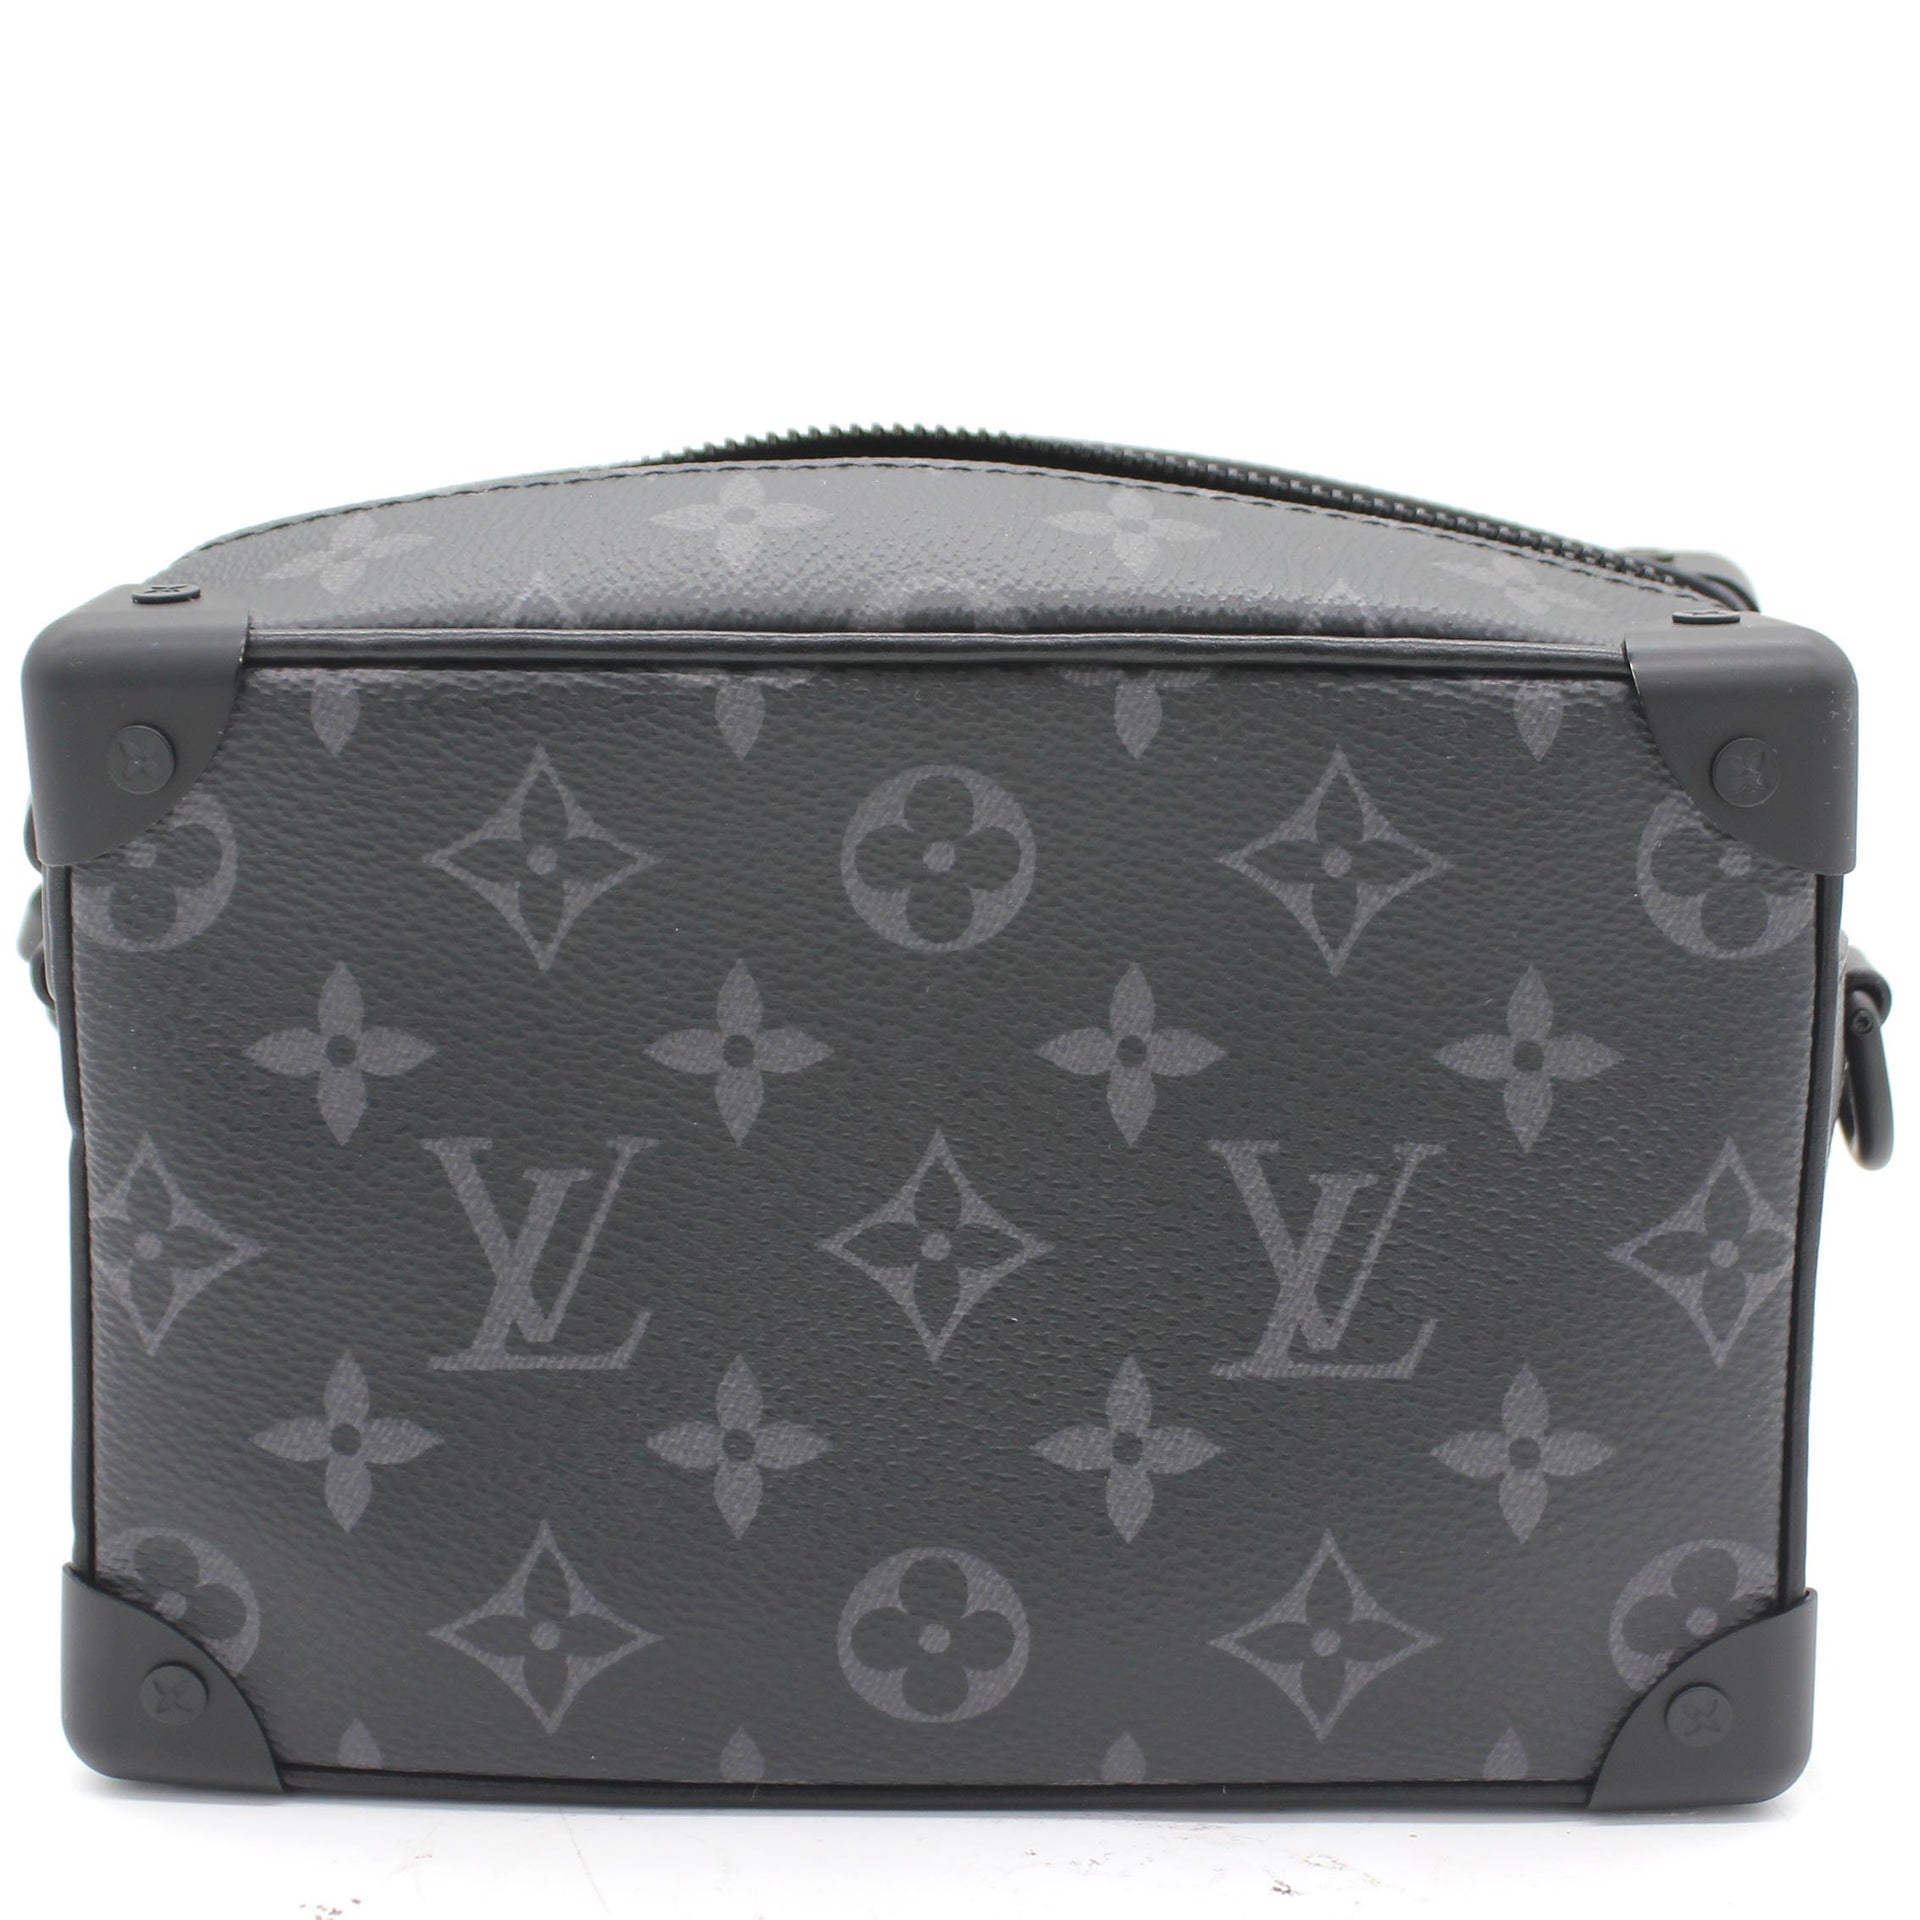 Sell Louis Vuitton Monogram Eclipse Soft Trunk Bag - Black